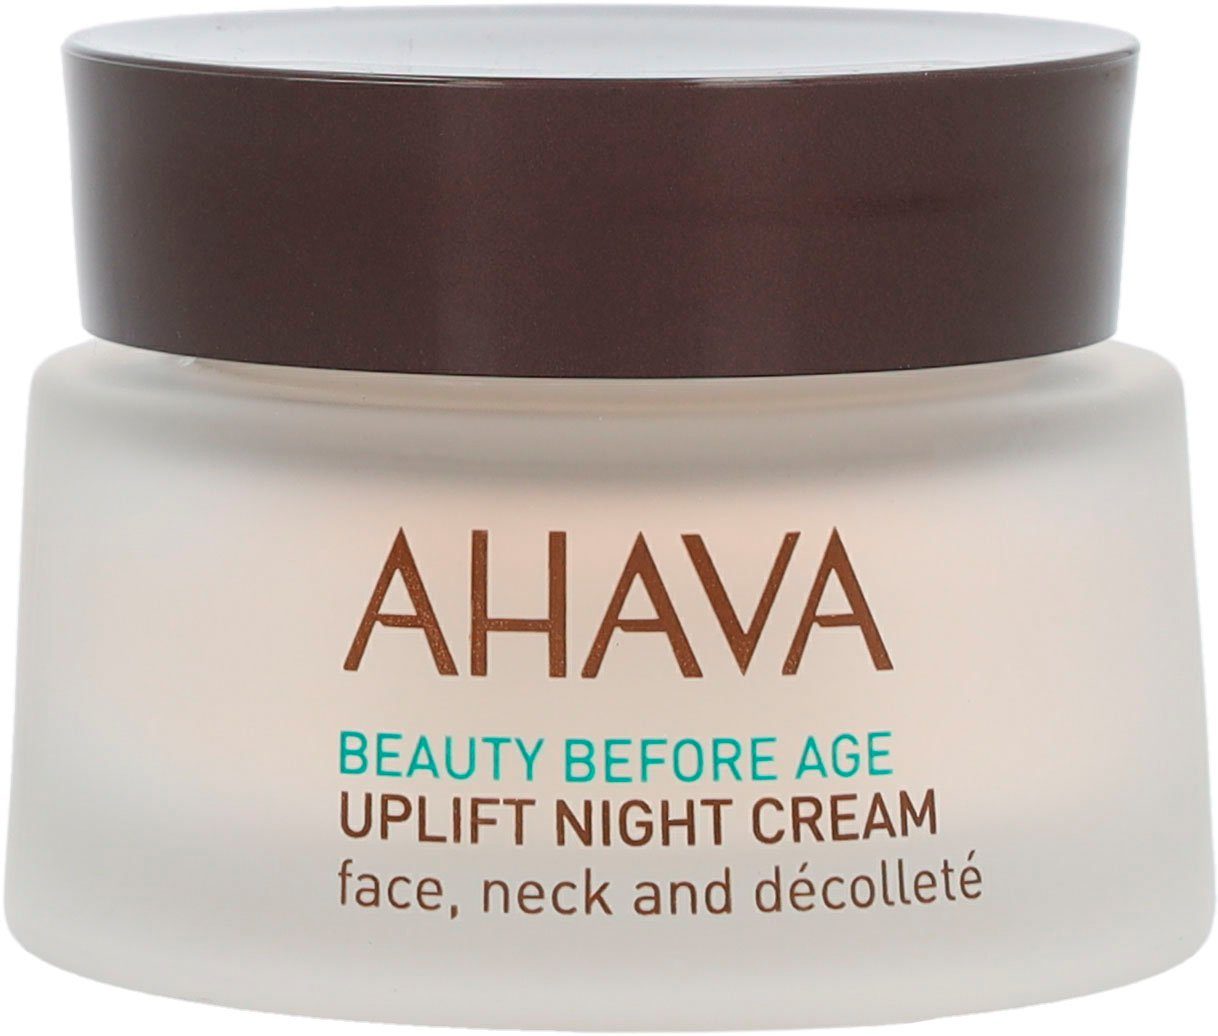 Age Beauty Night Cream Uplift Nachtcreme Before AHAVA